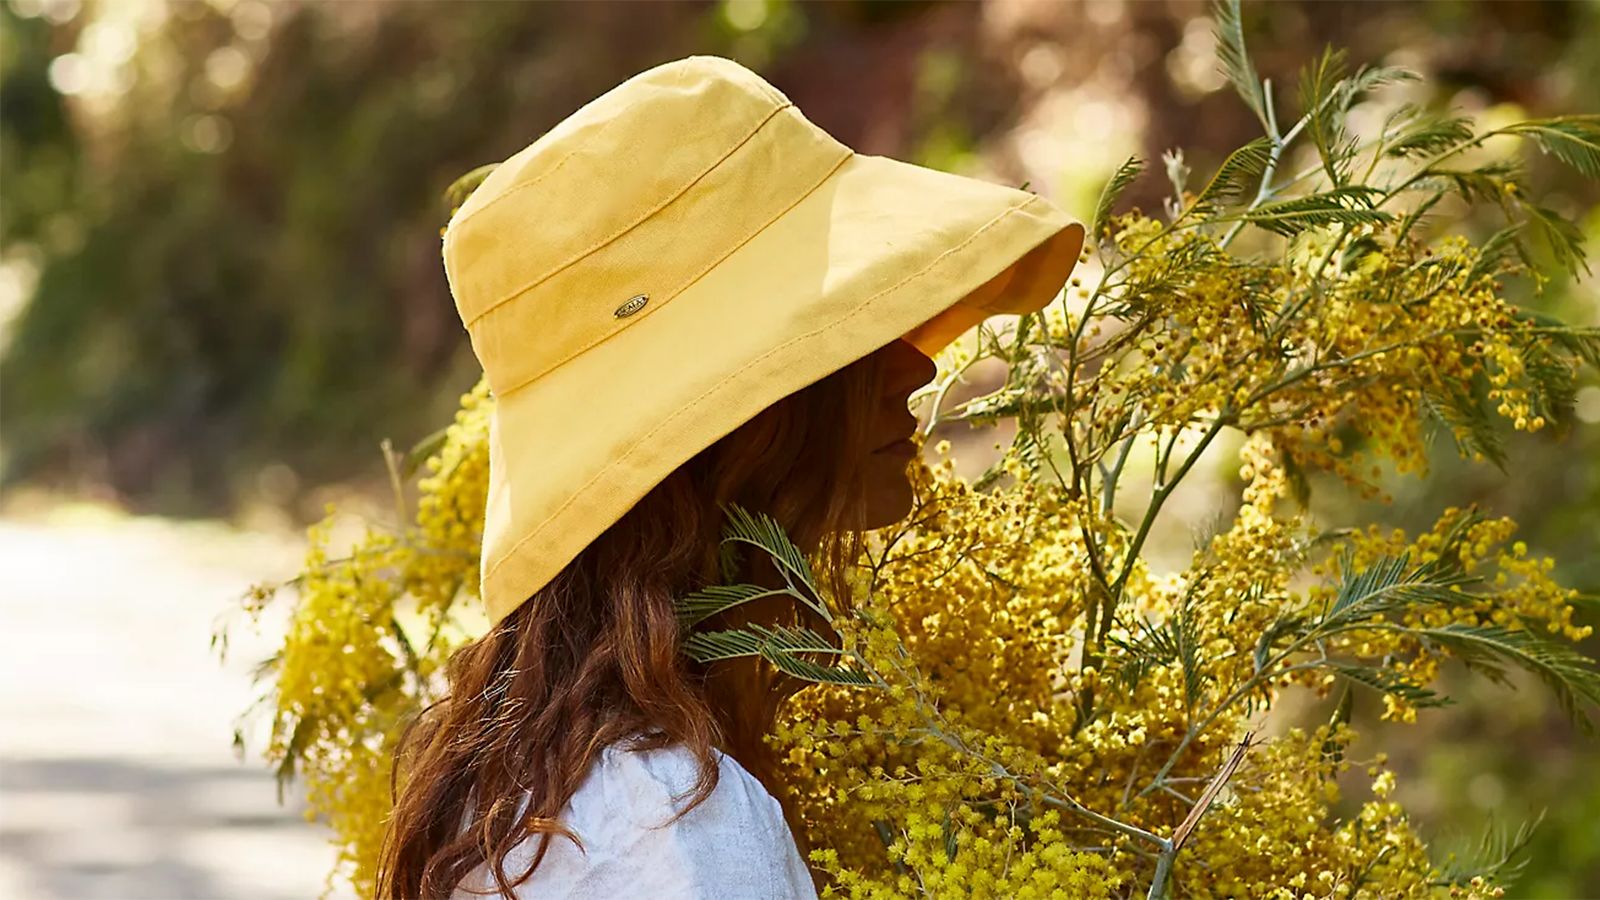 Floppy Straw Hat Large Brim Sun Hat Women Summer Beach Cap Big Foldable  Fedora Hats : : Clothing, Shoes & Accessories